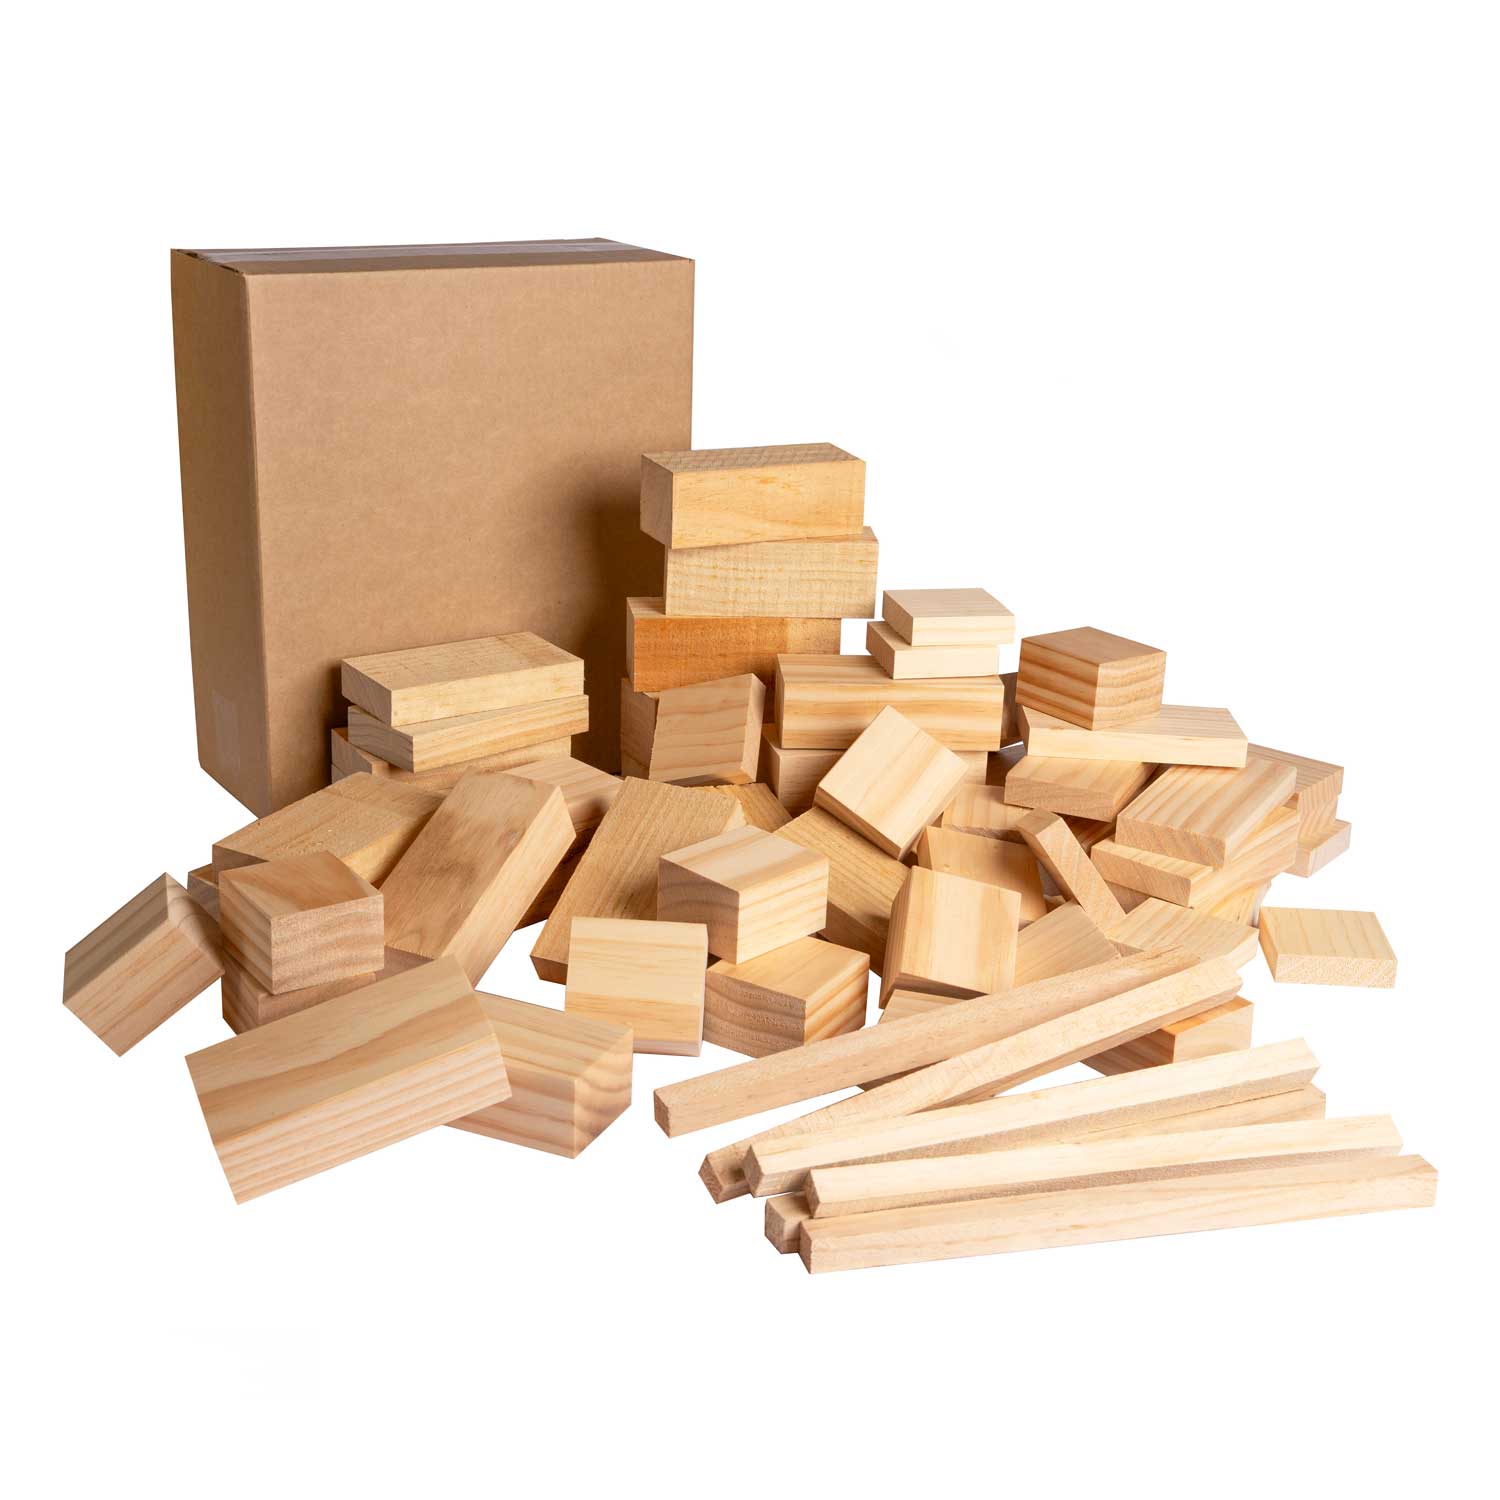 Box of Untreated Wood Blocks